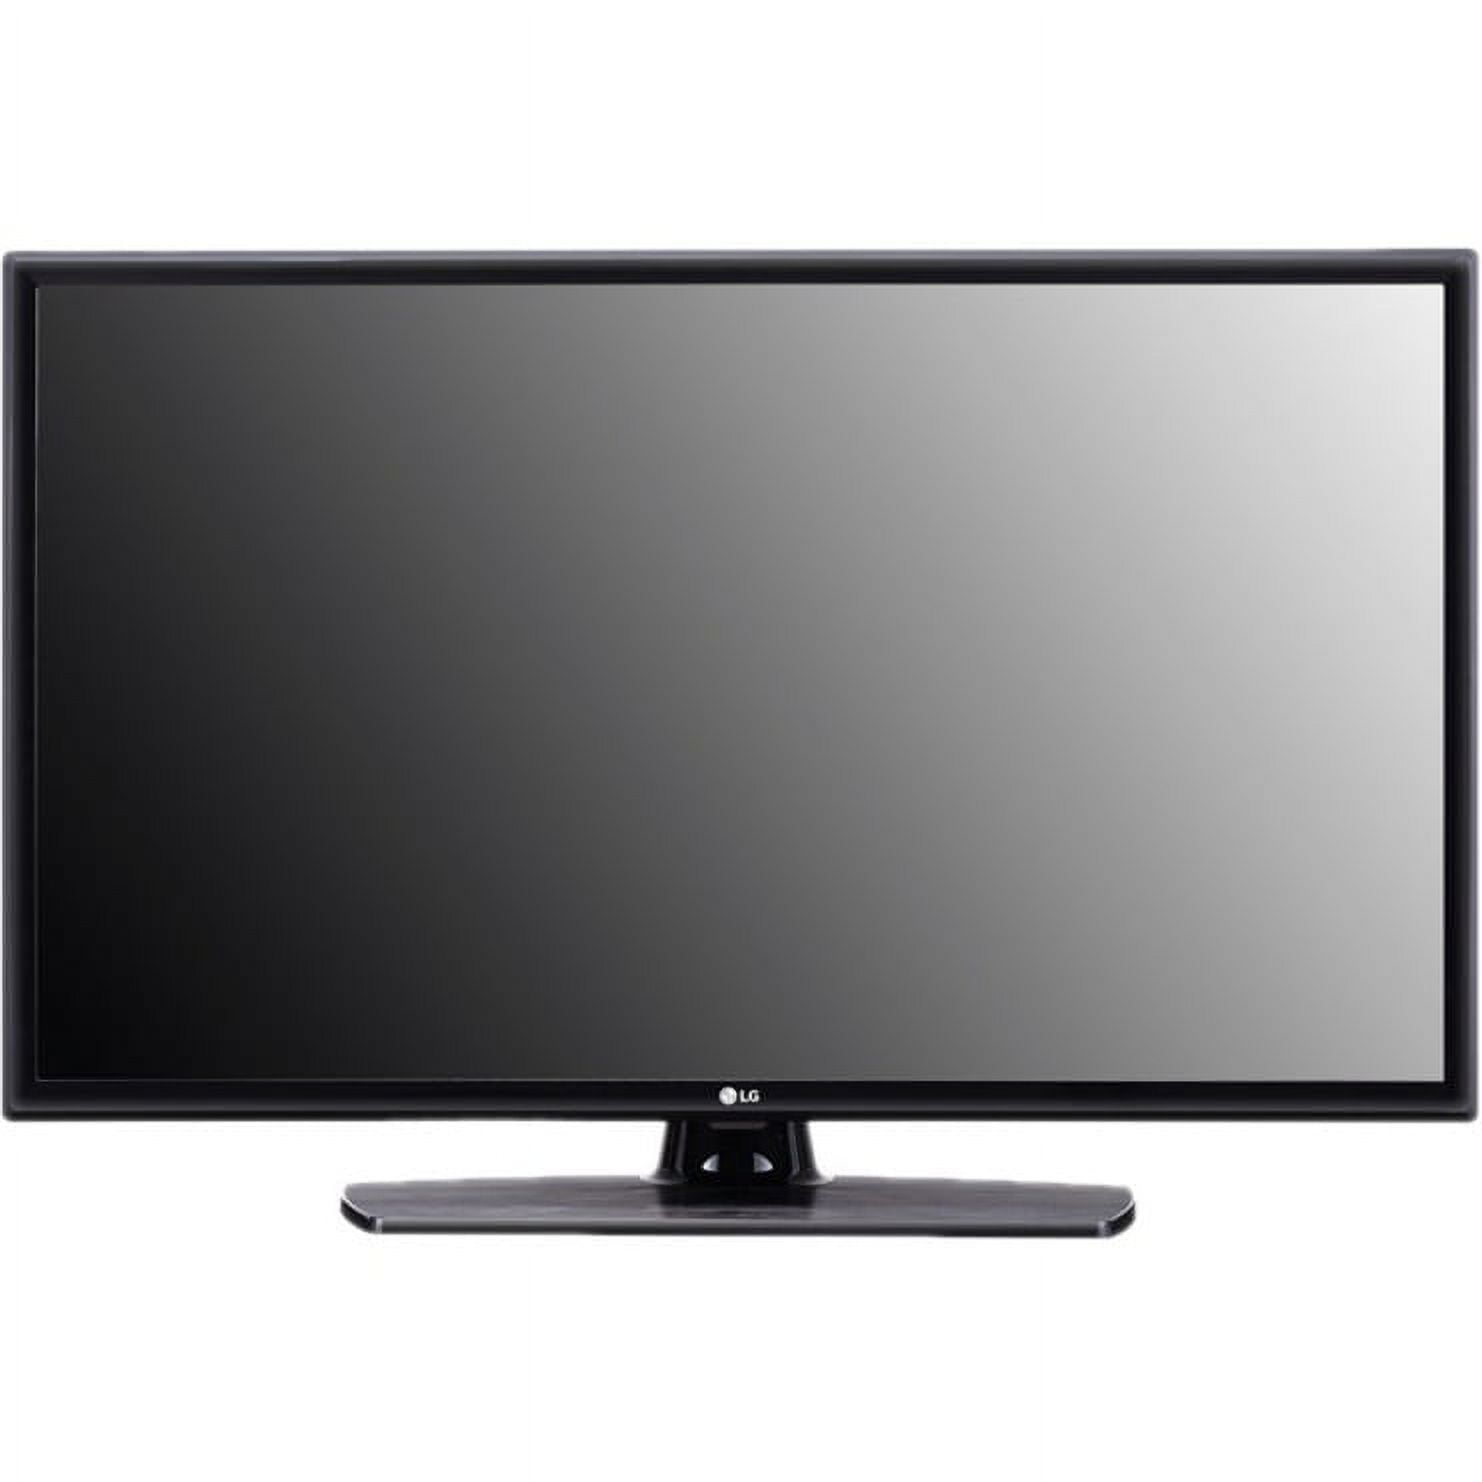 LG 40 Inch LED TV - 40LF570T price from souq in Saudi Arabia - Yaoota!